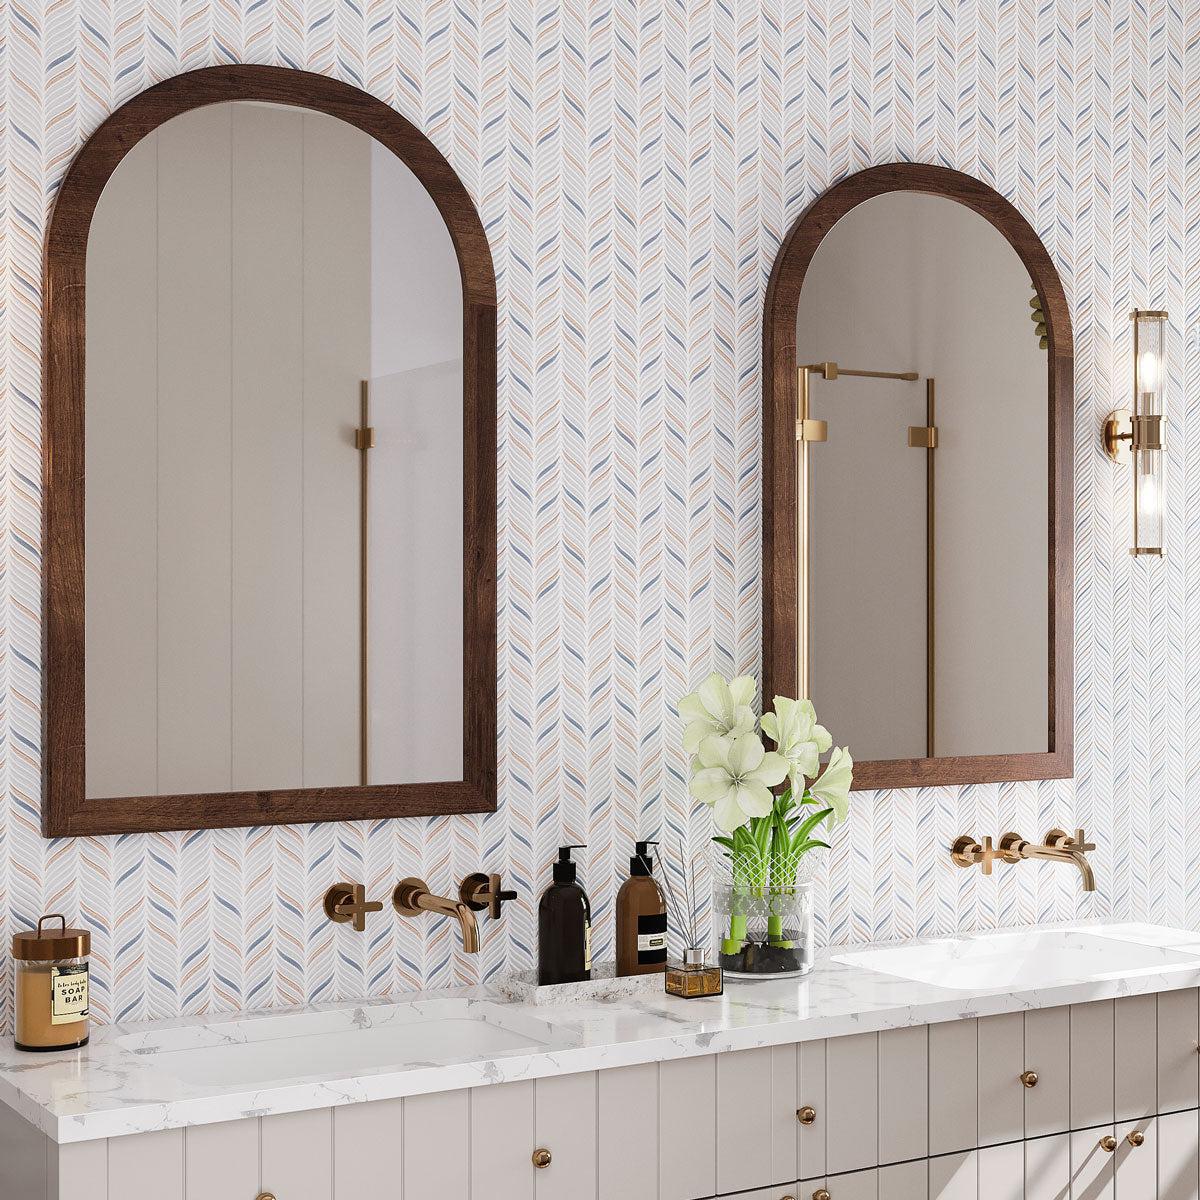 Chateau White Sprig Ceramic Mosaic Tile Bathroom Wall Tile